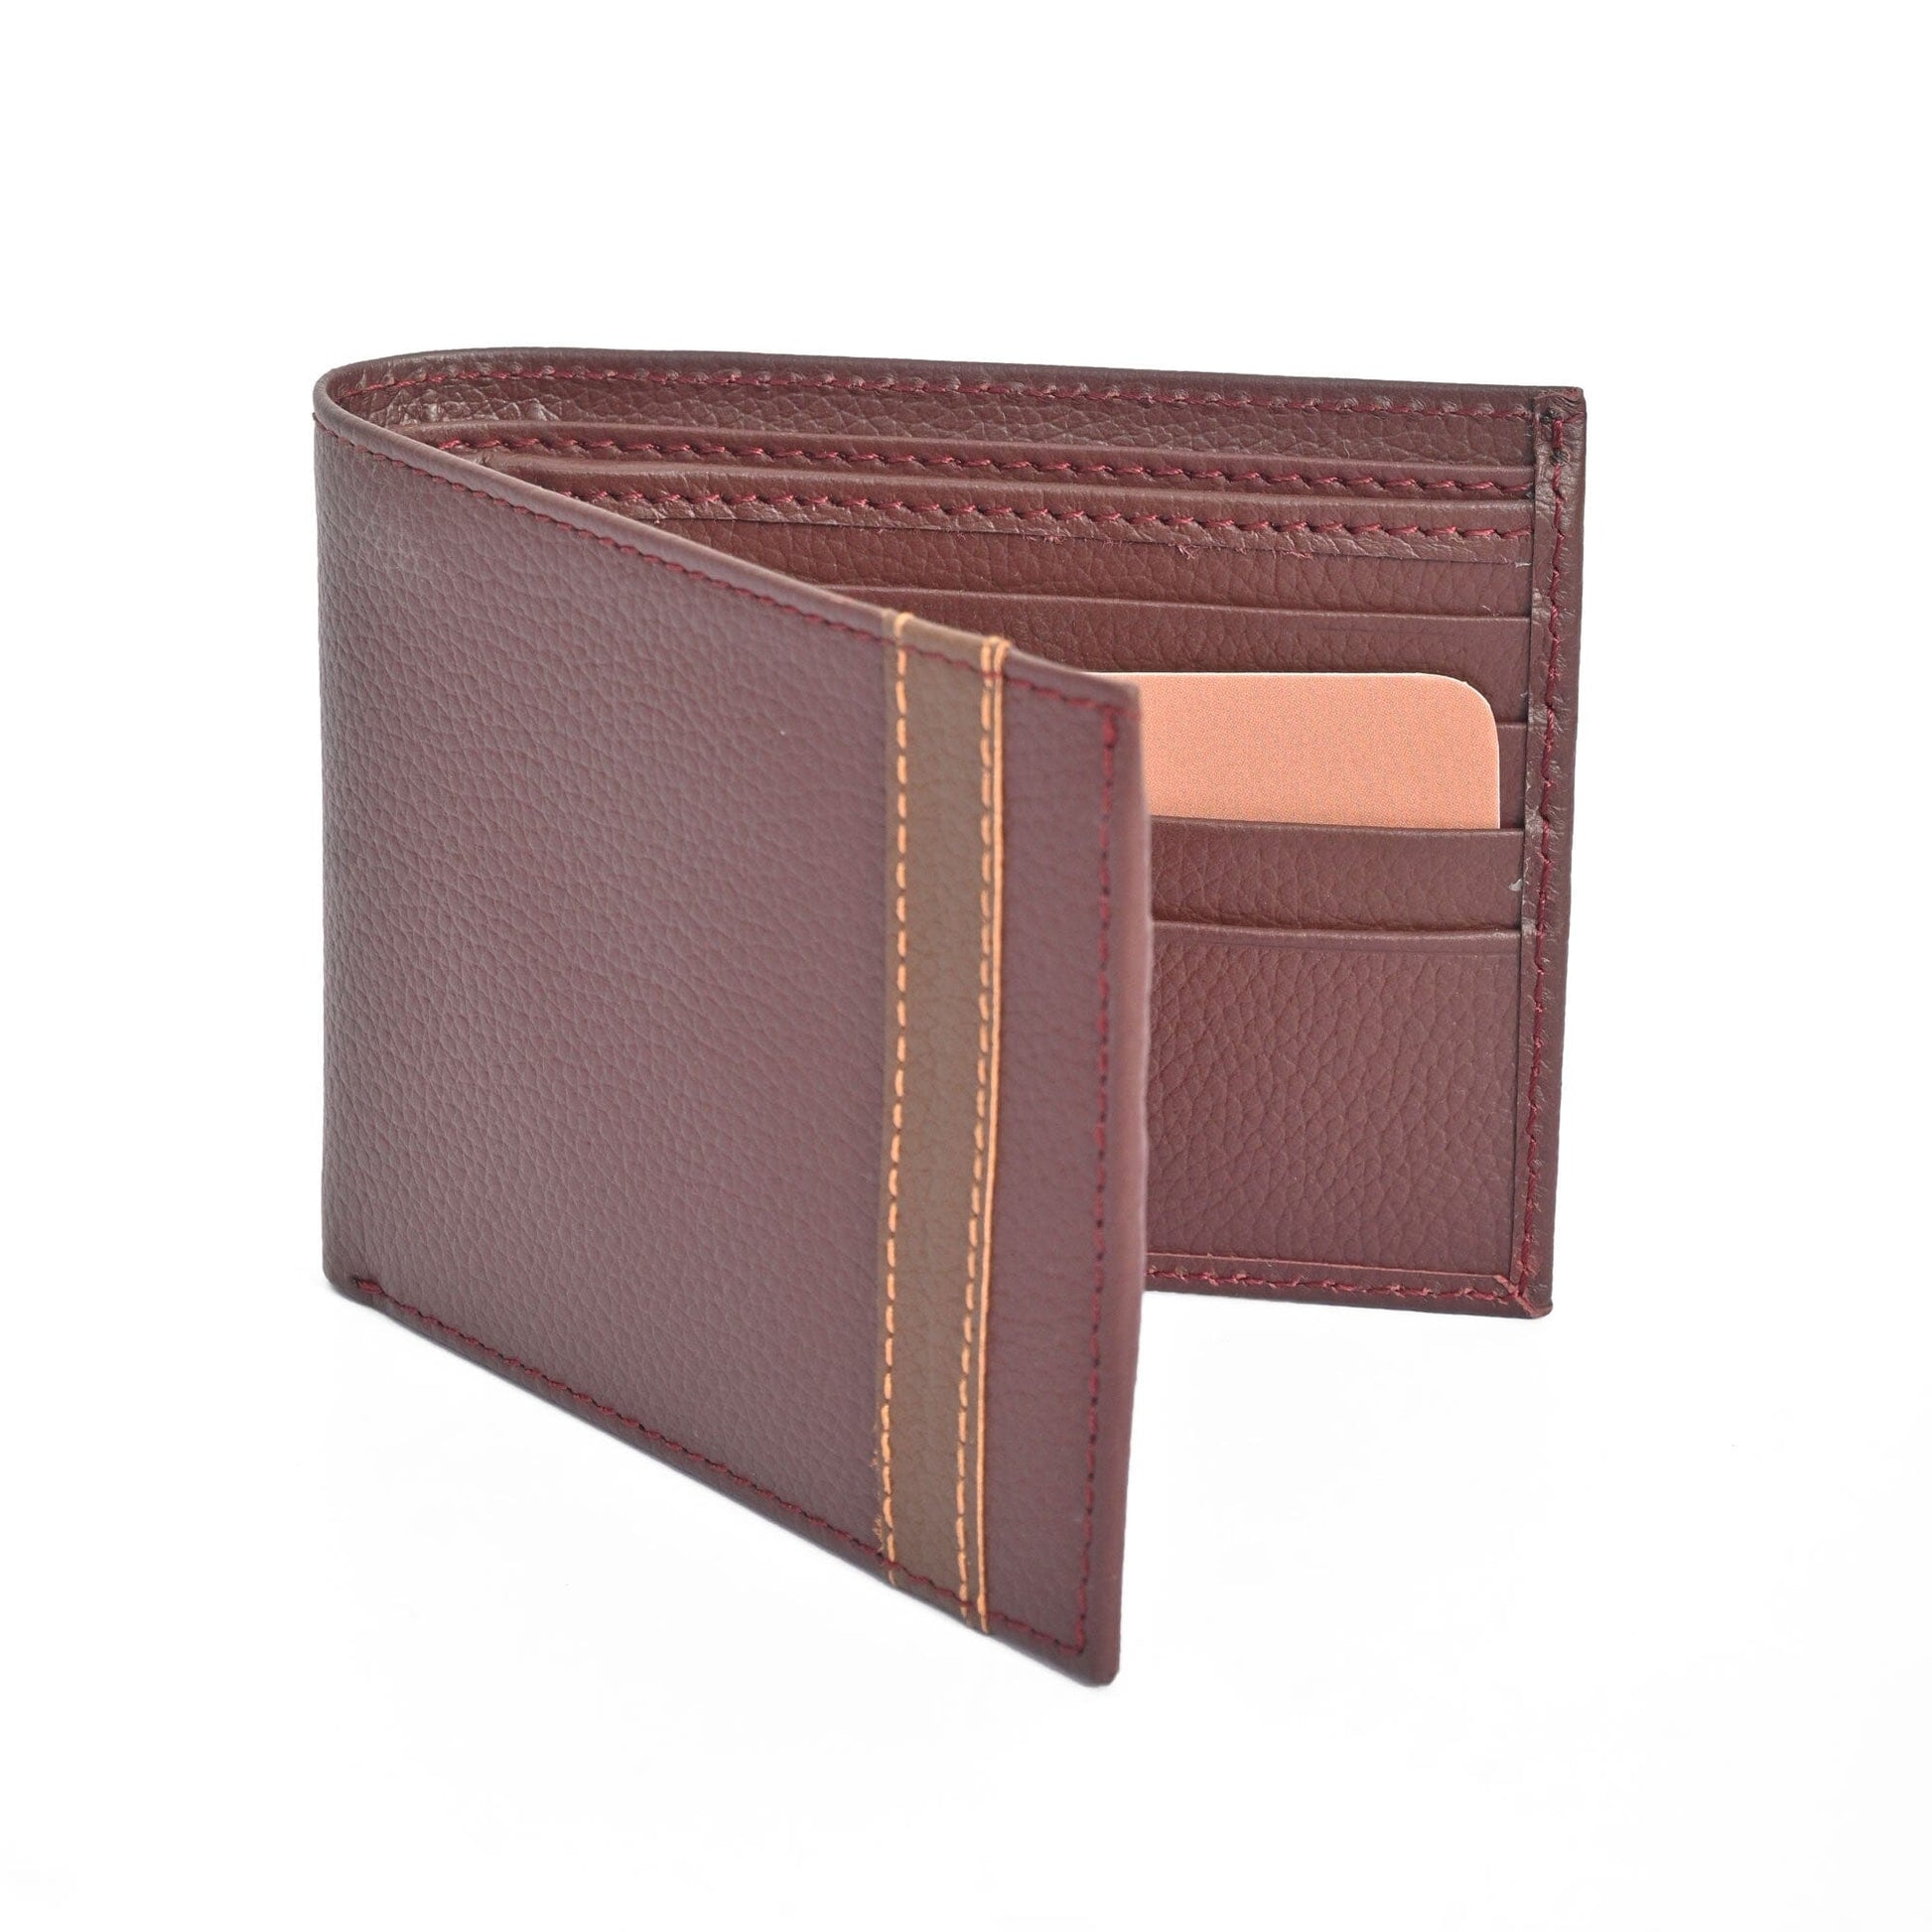 Oxenhide Men's UK4 Genuine Leather Pocket Wallet Wallet Oxenhide Sale Basis Maroon 